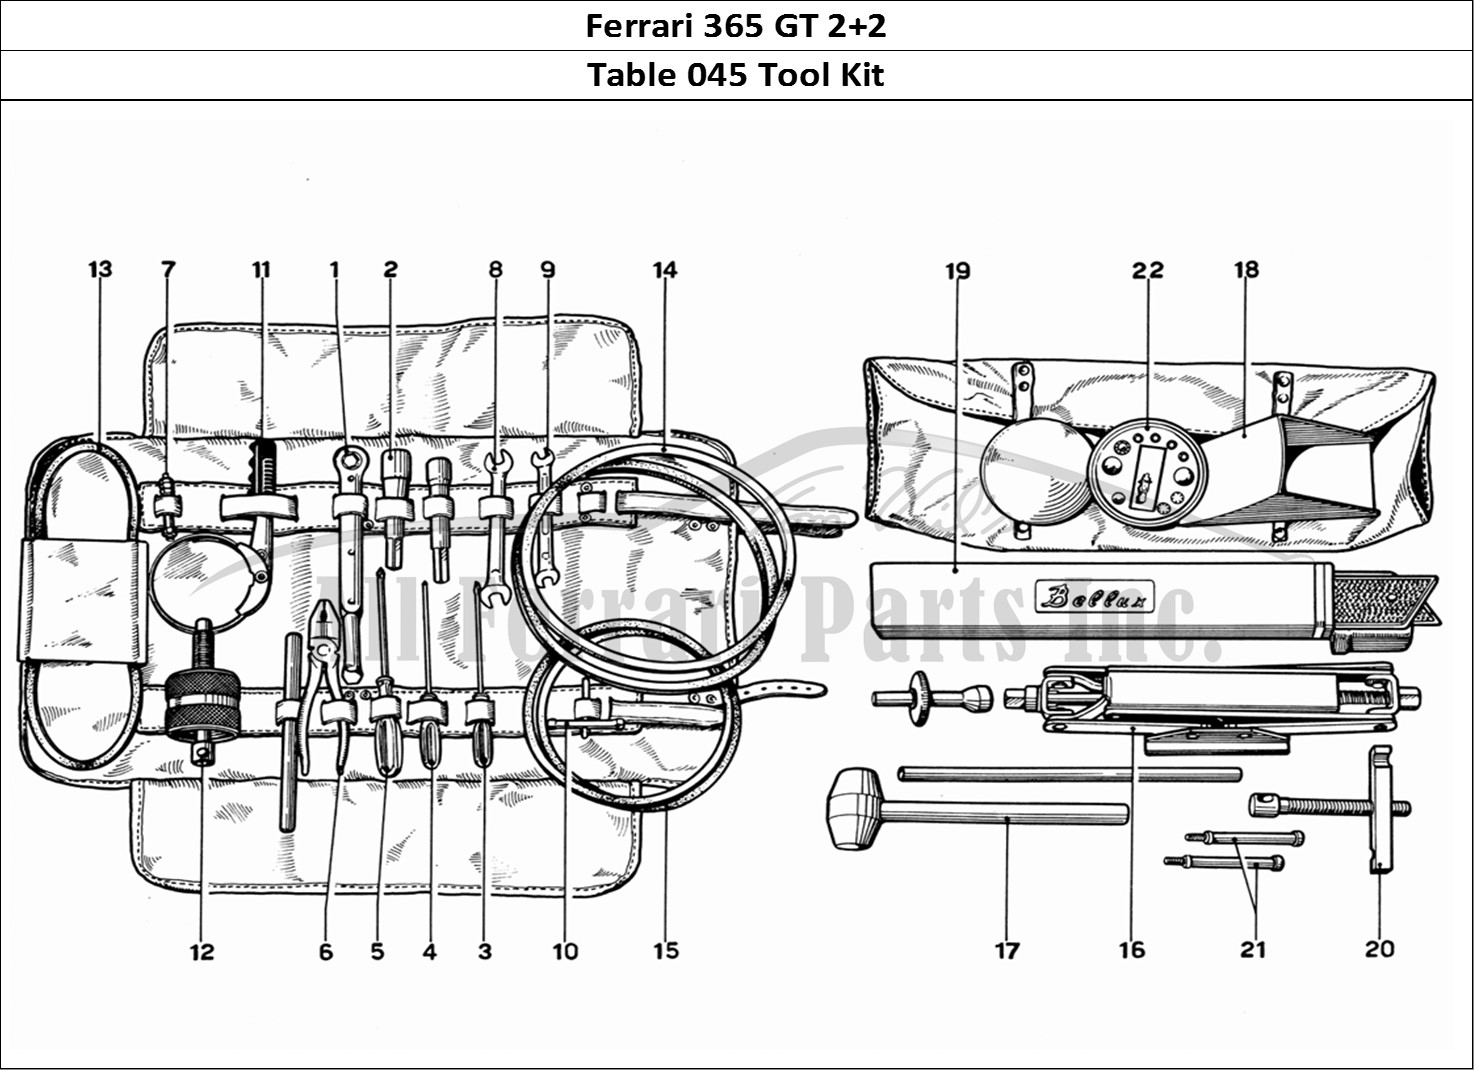 Ferrari Parts Ferrari 365 GT 2+2 (Mechanical) Page 045 Tool-Kit